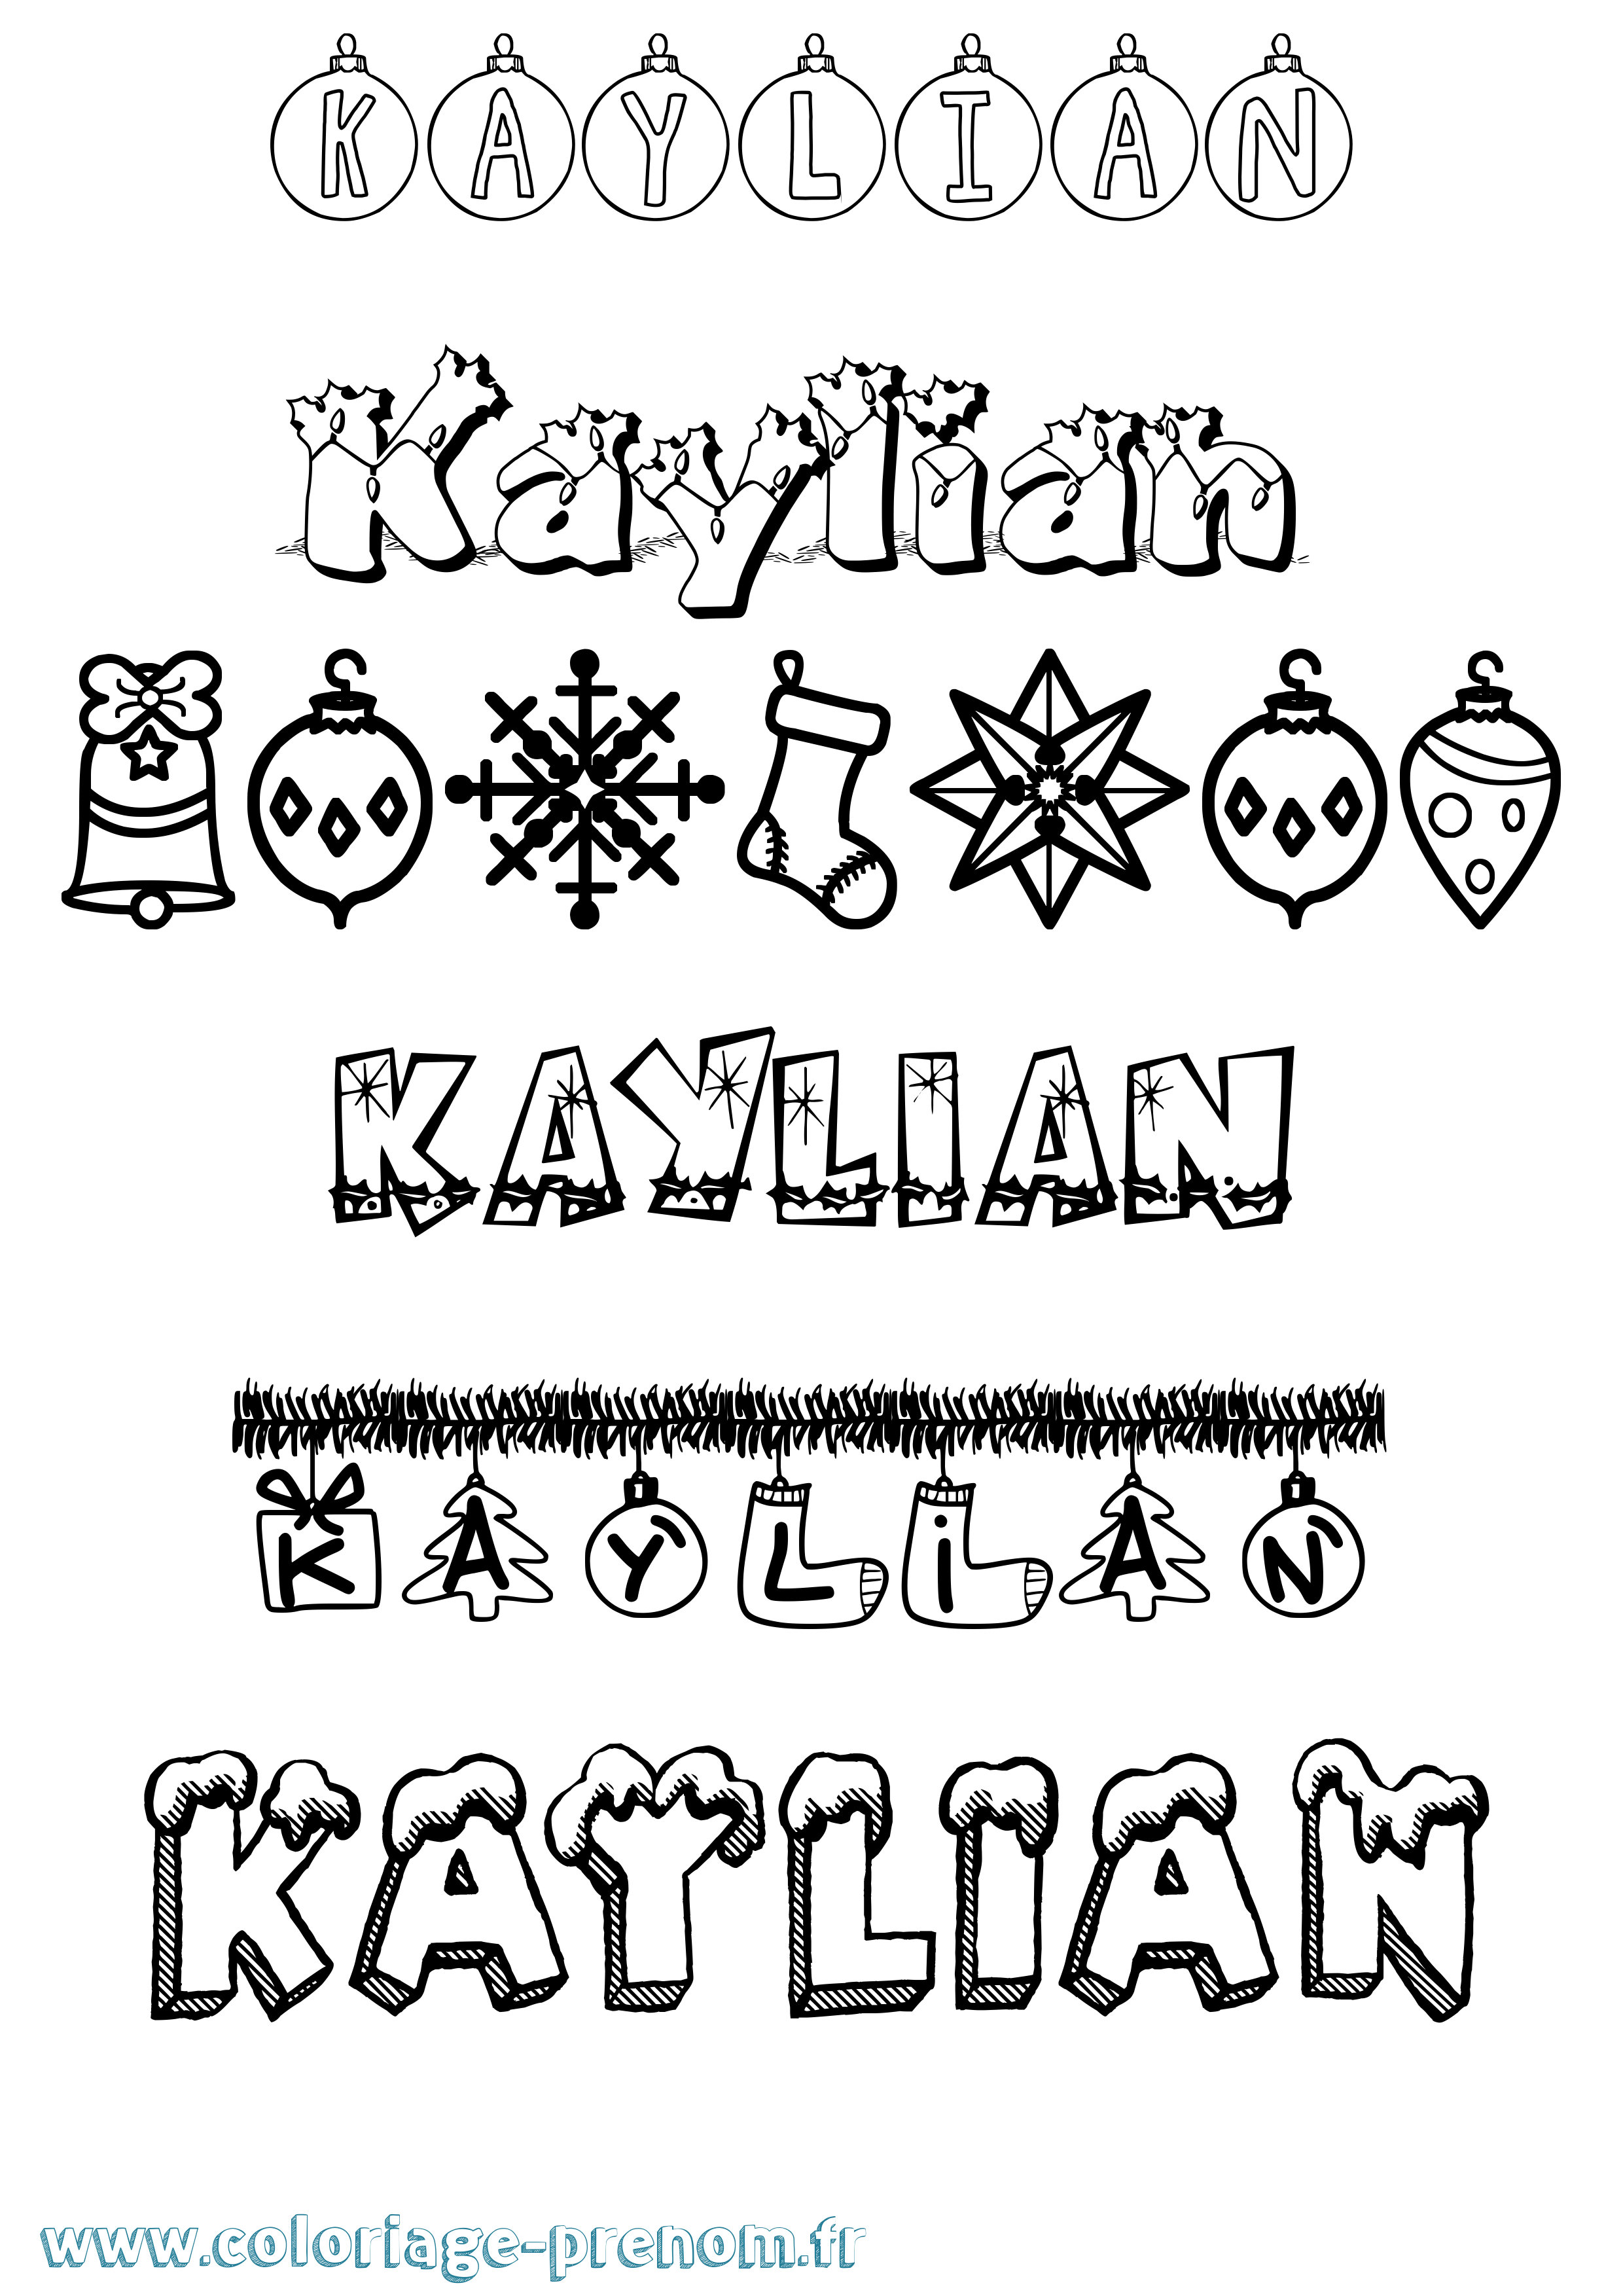 Coloriage prénom Kaylian Noël